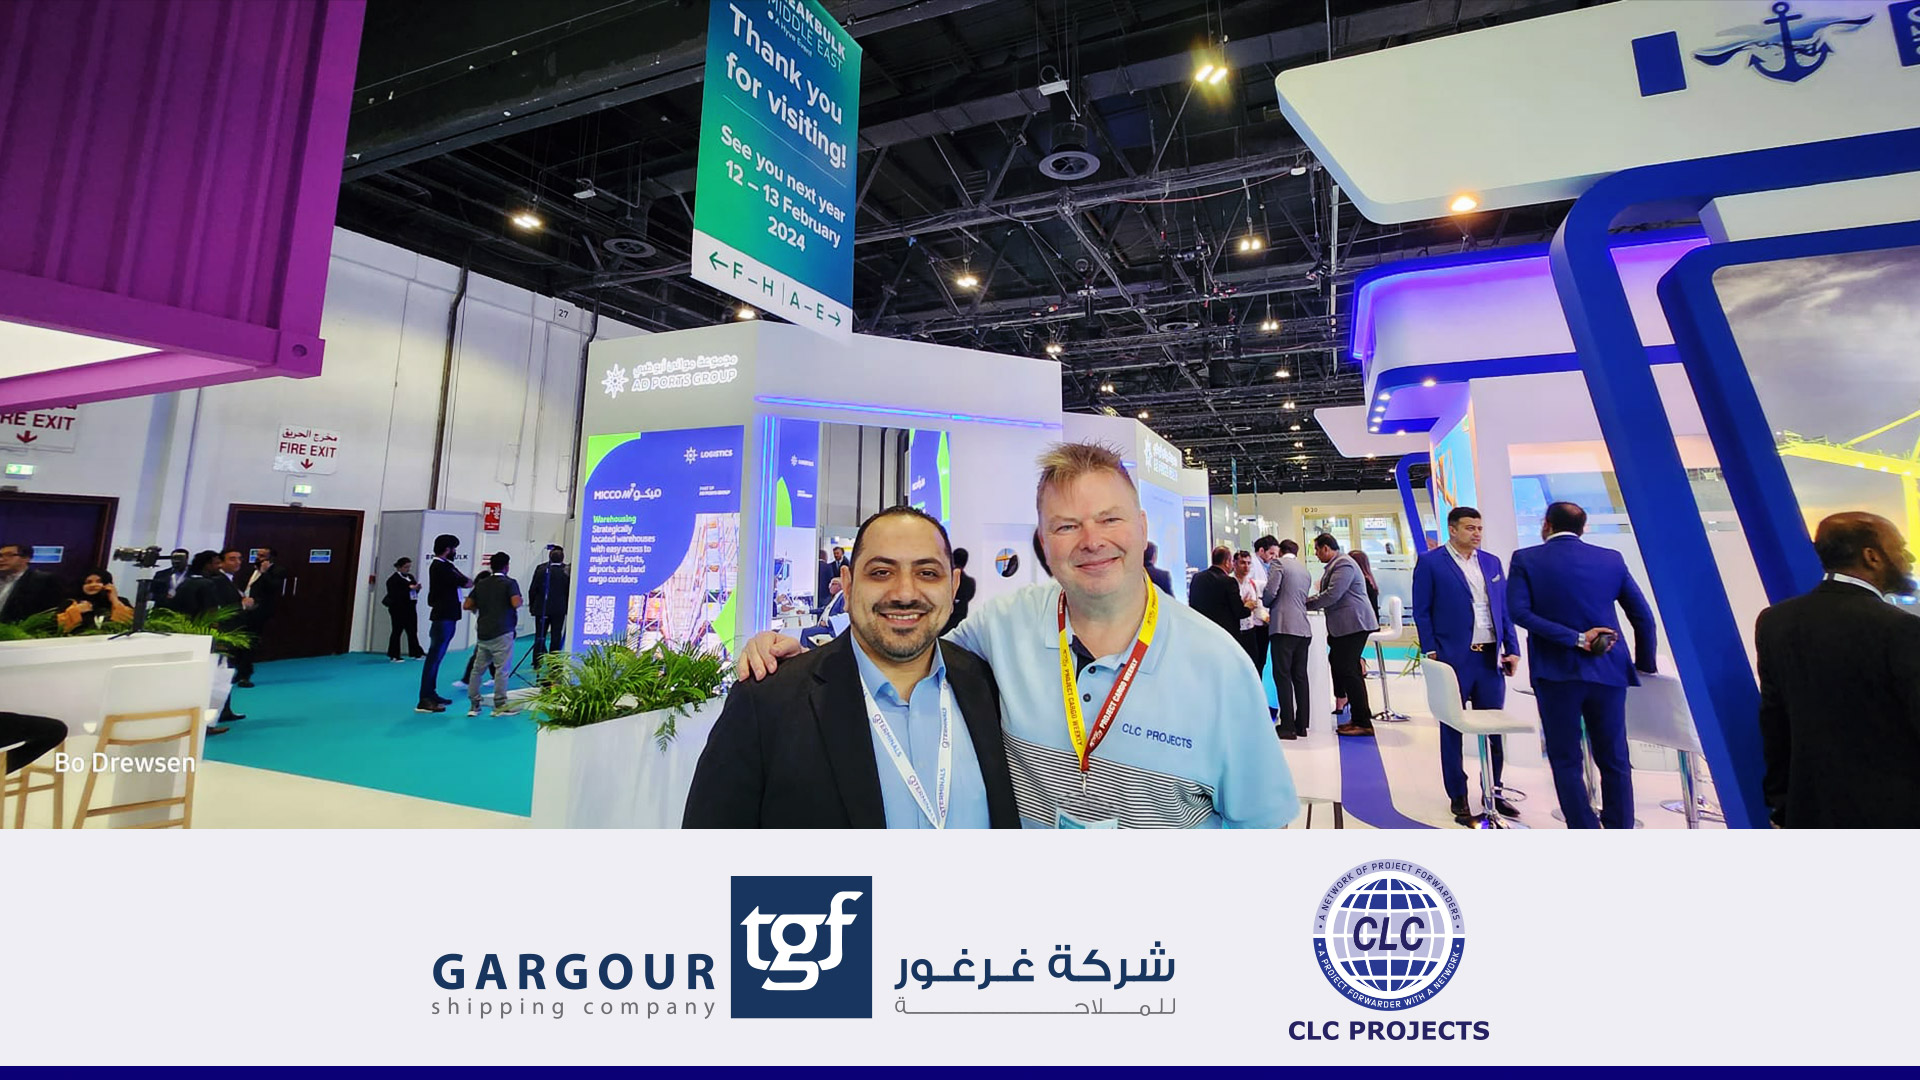 CLC Projects Chairman with Mr. AbdulRahman Taleb Ali of Gargour Shipping Co. at Breakbulk Middle East in Dubai